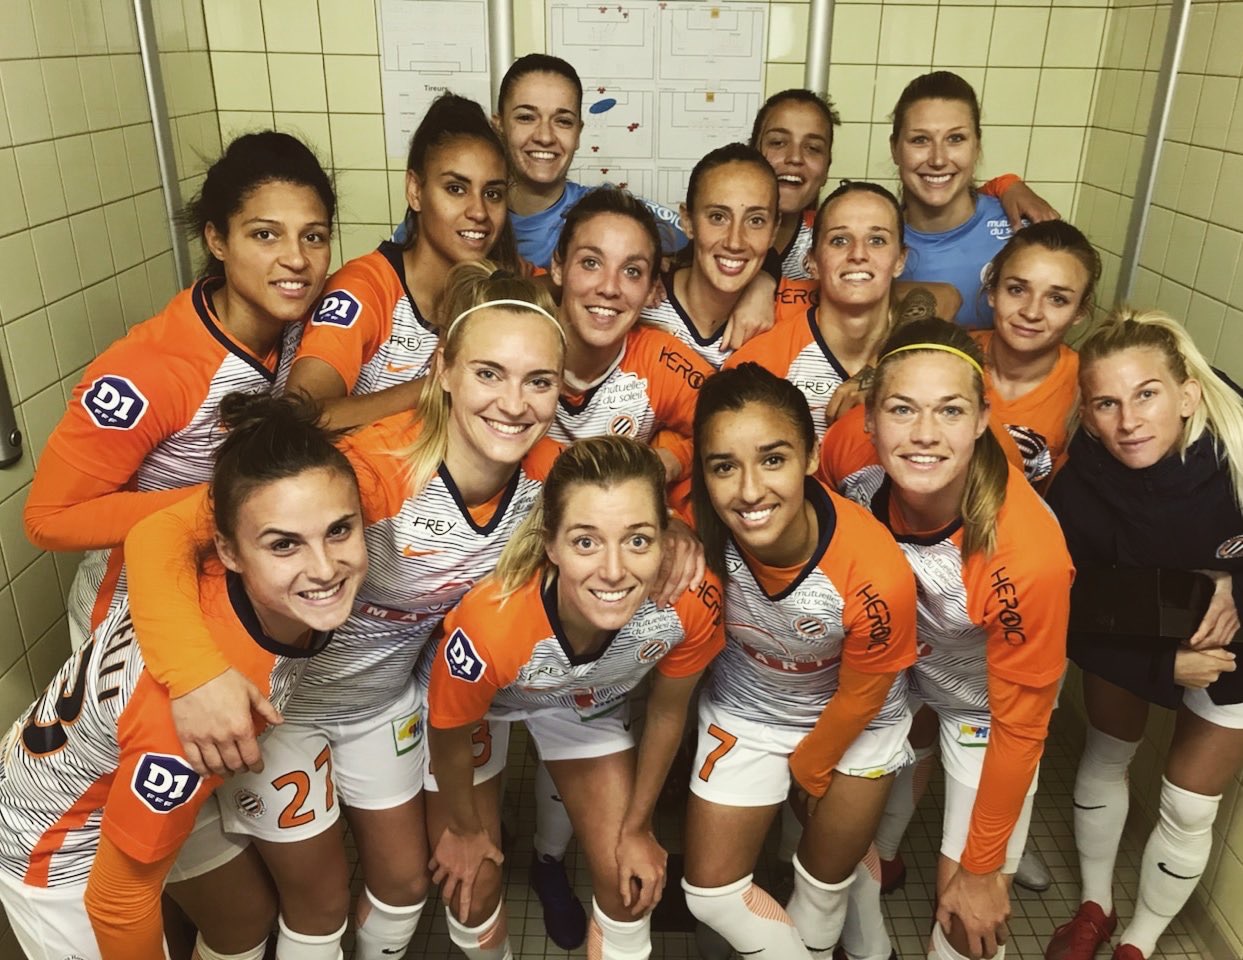 Equipe Féminine du FC Metz